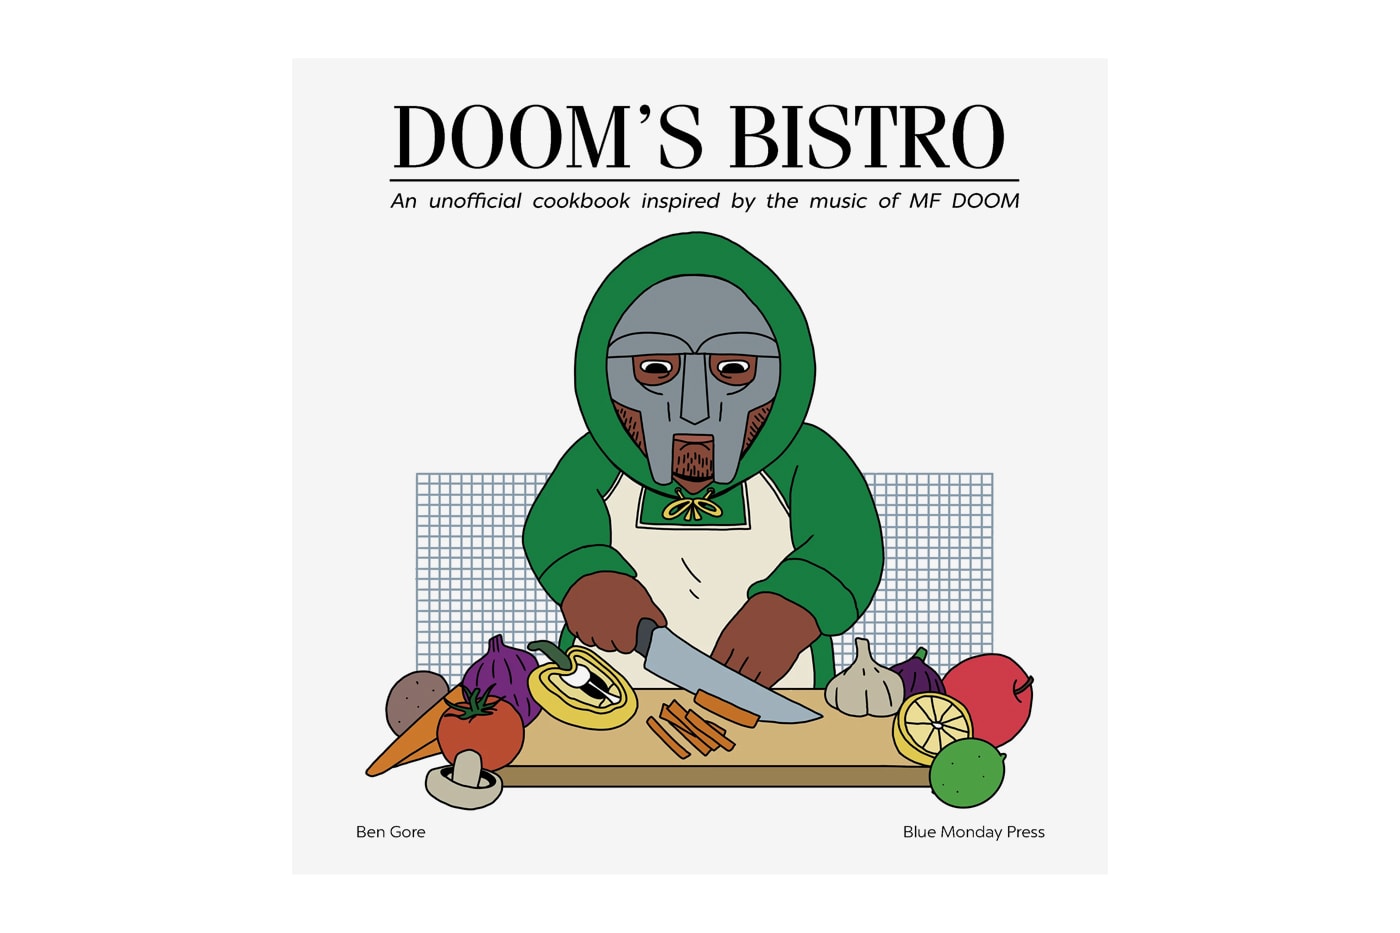 MF DOOM 'DOOM'S BISTRO' Cookbook Release Info